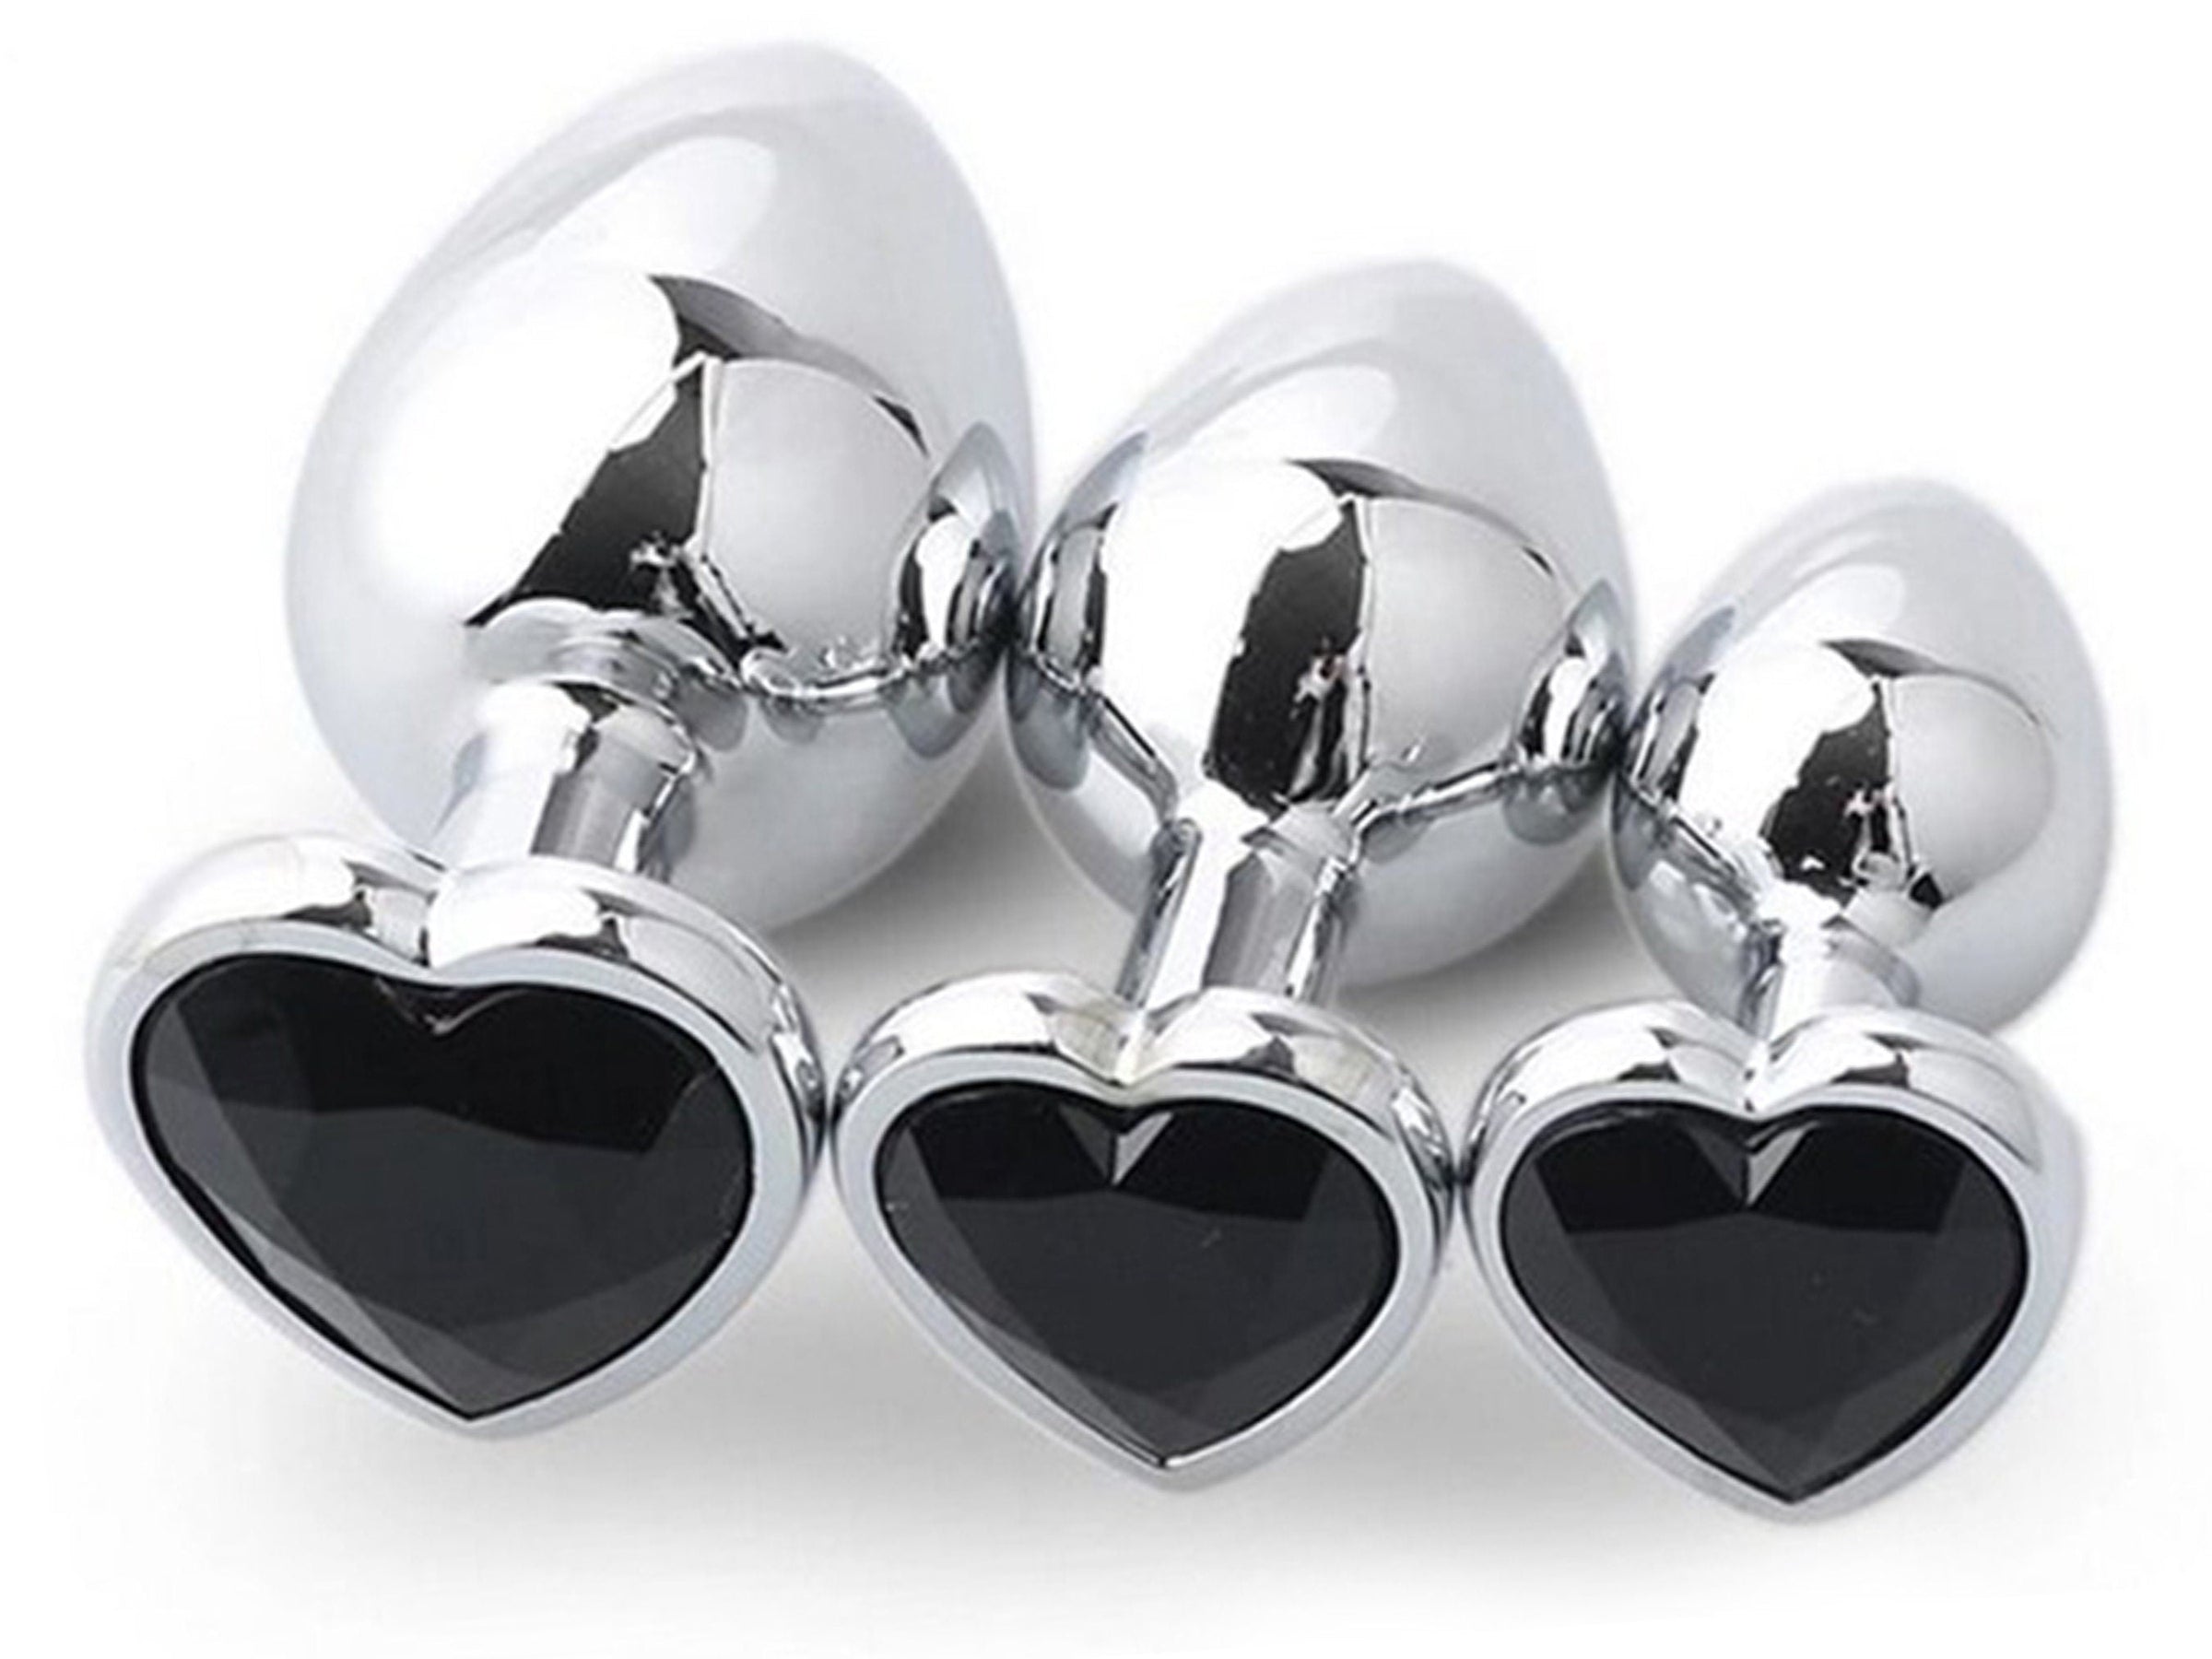 BLACK HEART Shaped Acrylic Crystal Butt plug 3 sizes anal toy sex jewe image